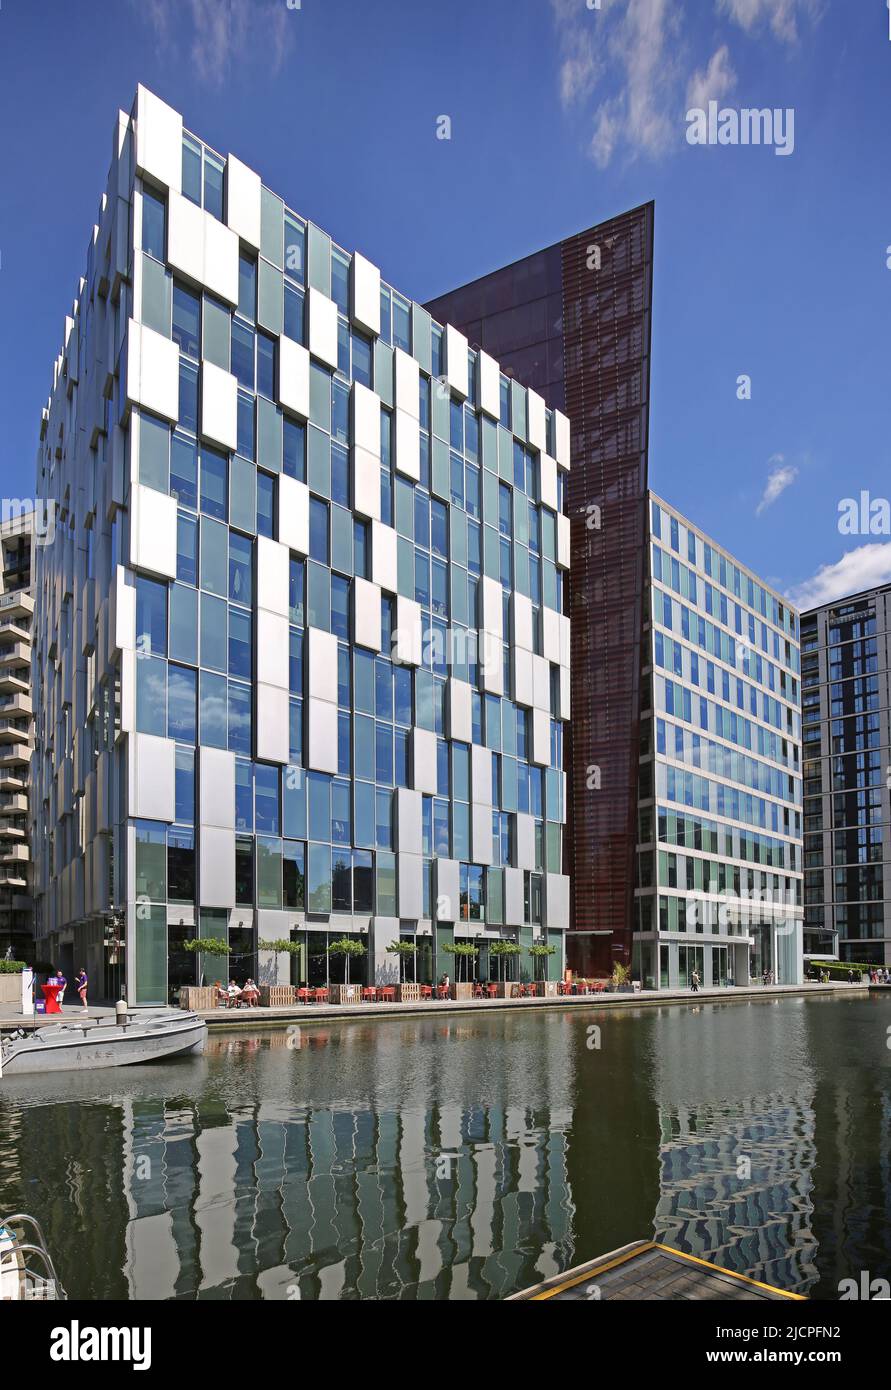 The new Merchant Square development on the Grand Union Canal Basin, Paddington, London, UK Stock Photo